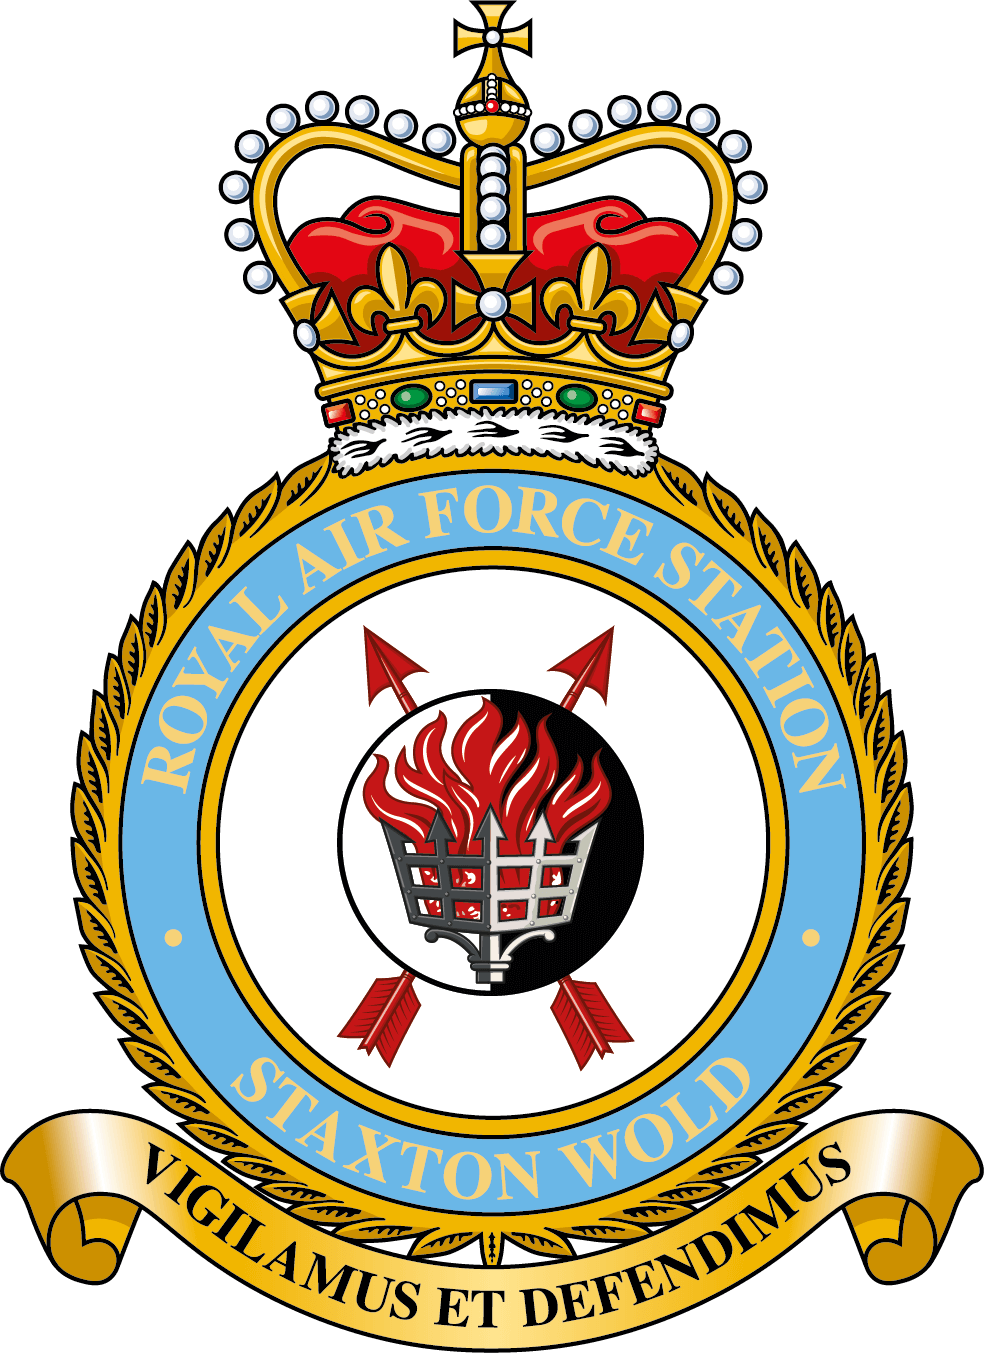 RAF Staxton Wold